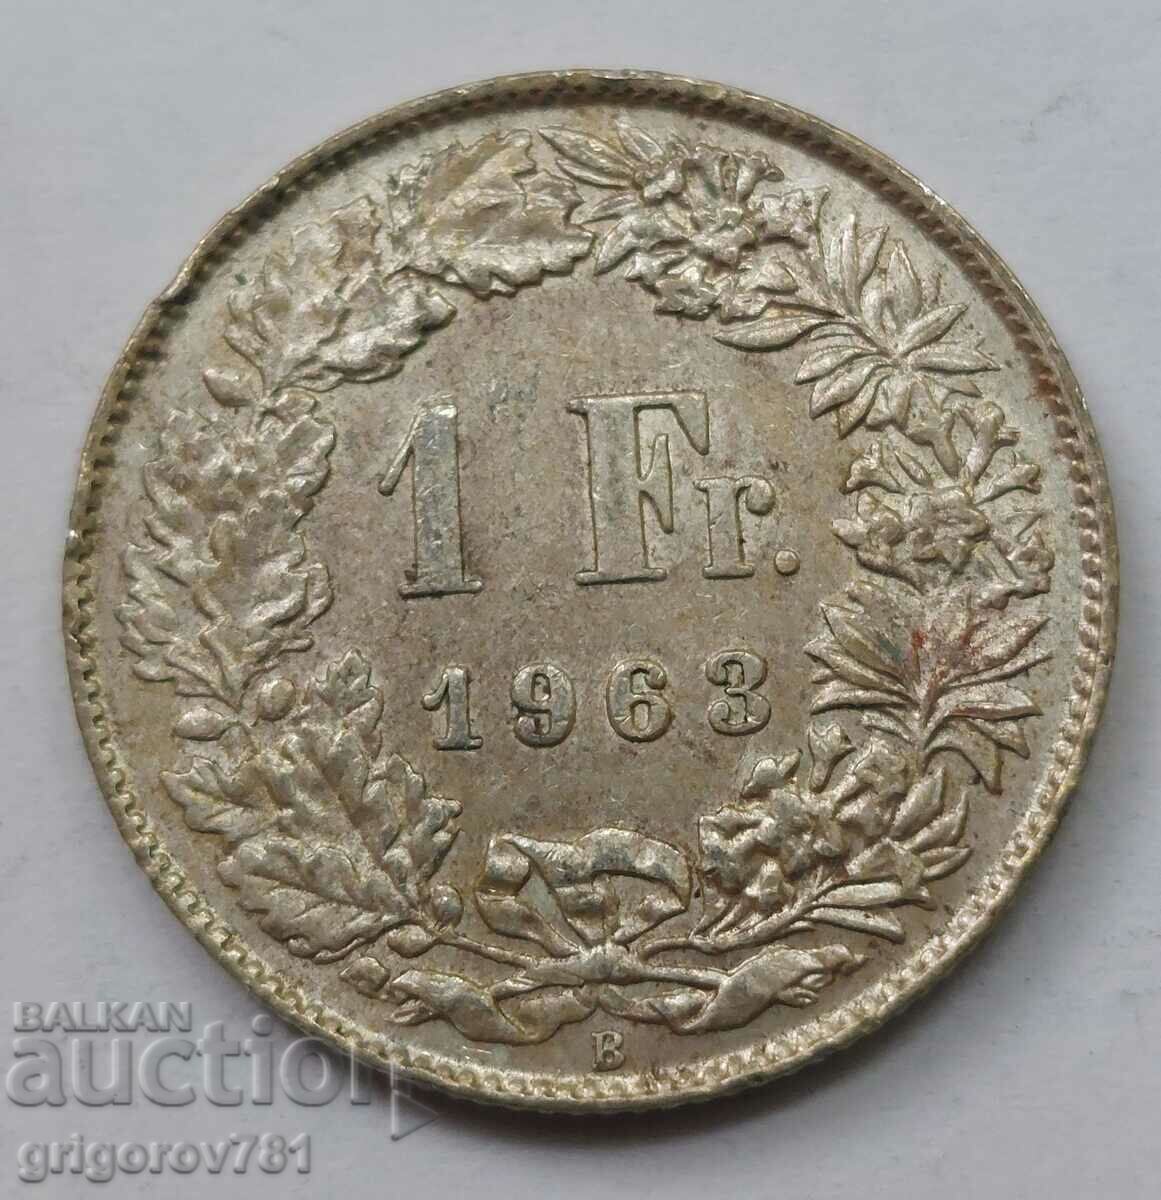 1 Franc Silver Switzerland 1963 B - Silver Coin #34